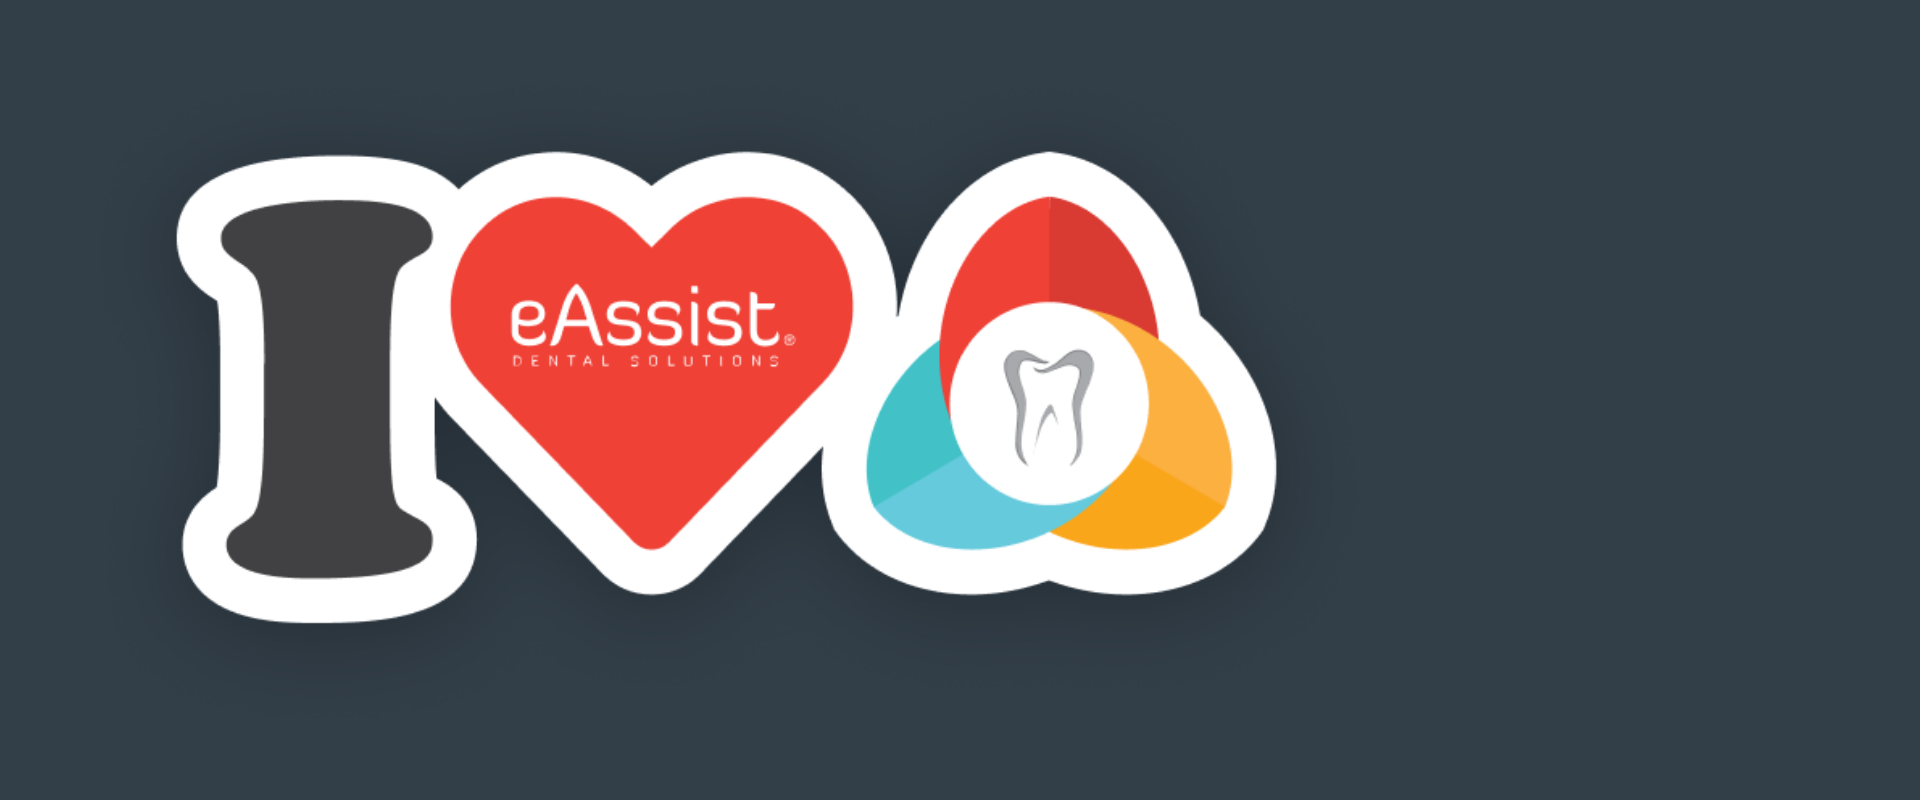 I heart eAssist_dental billing